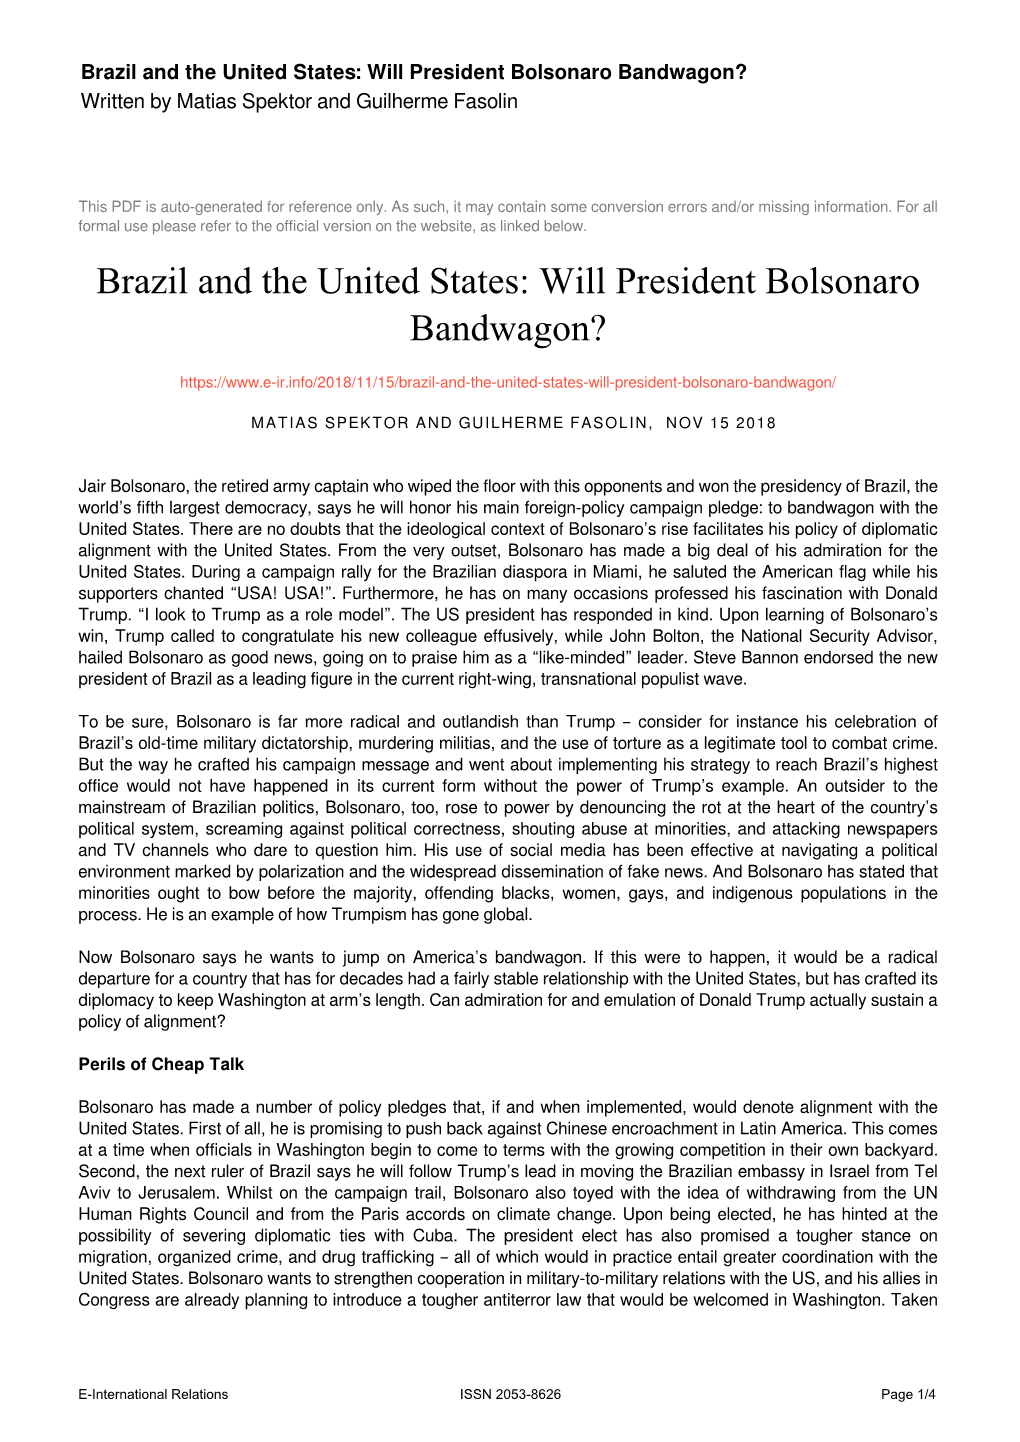 Will President Bolsonaro Bandwagon? Written by Matias Spektor and Guilherme Fasolin